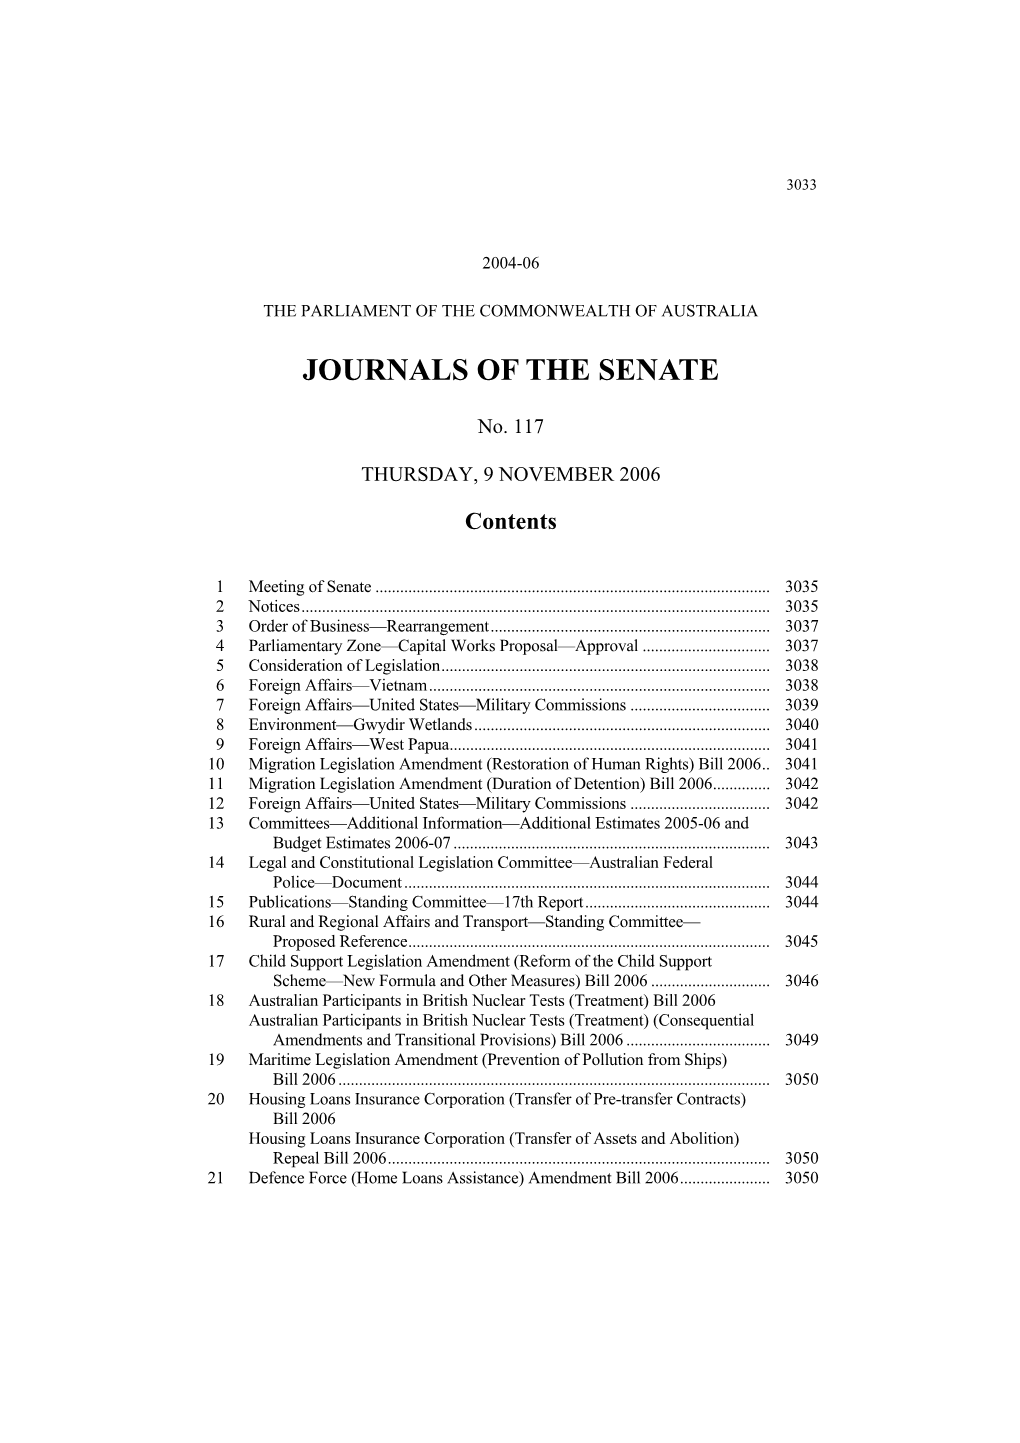 Journals of the Senate